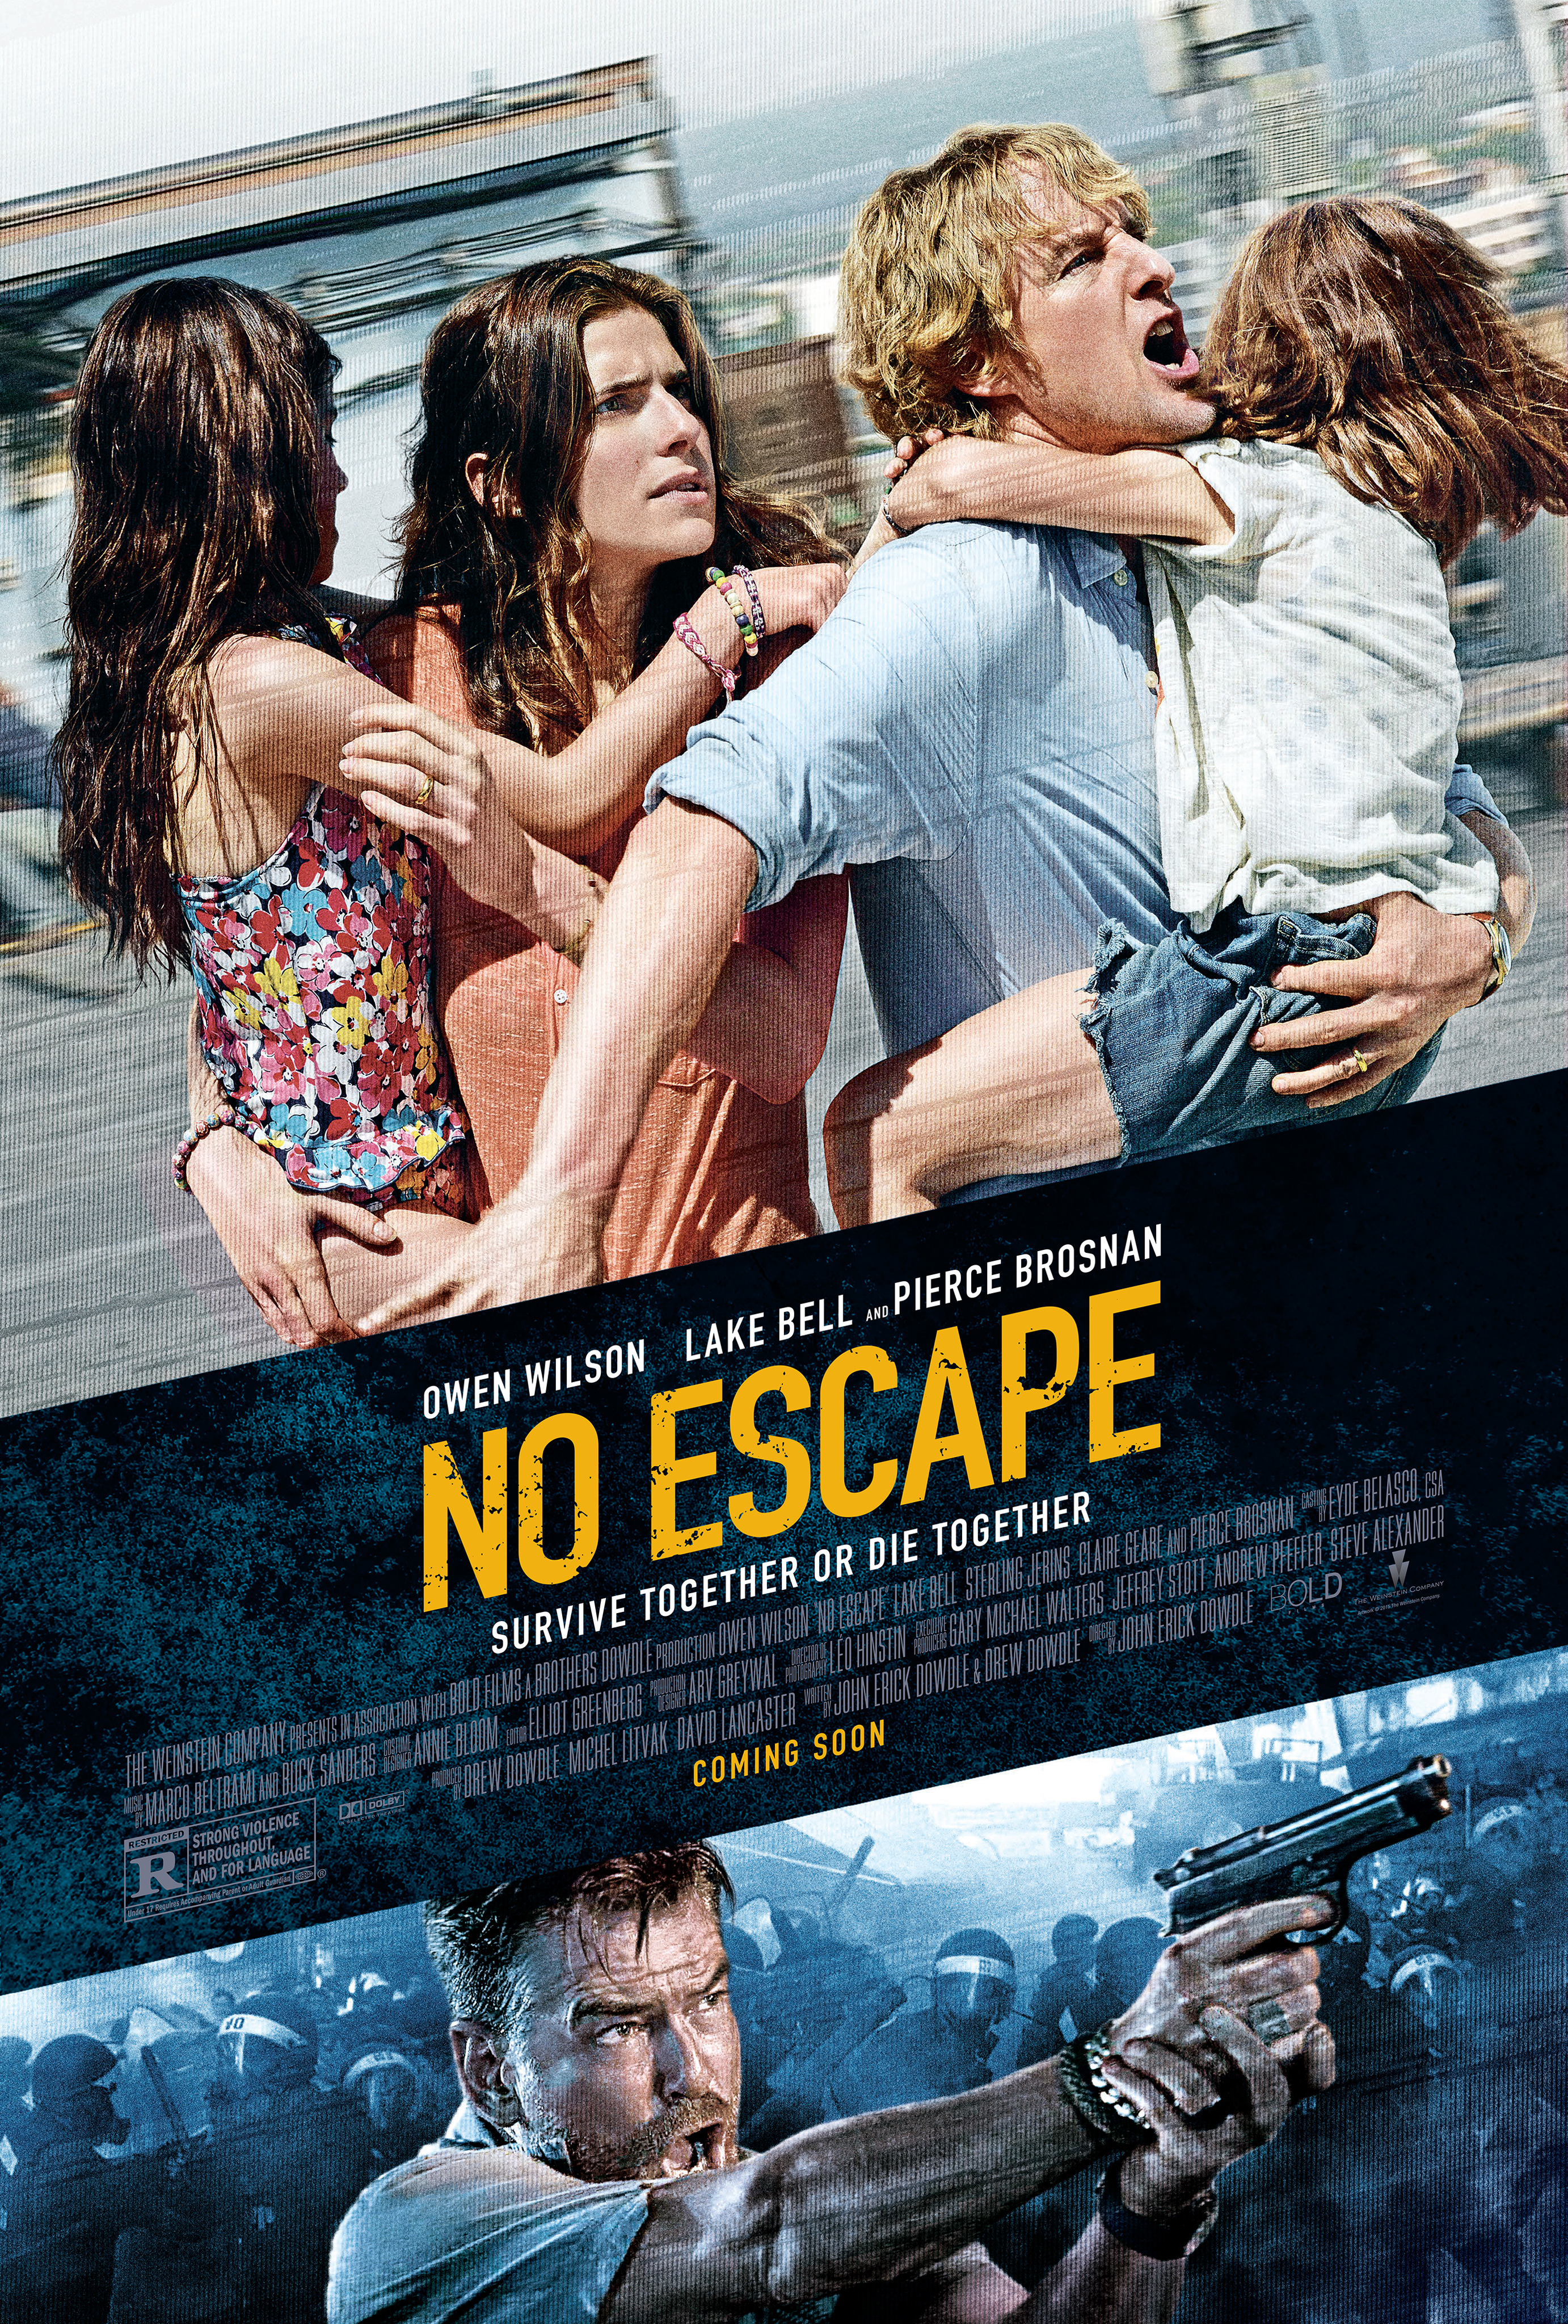 Pierce Brosnan, Owen Wilson and Lake Bell in No Escape (2015)